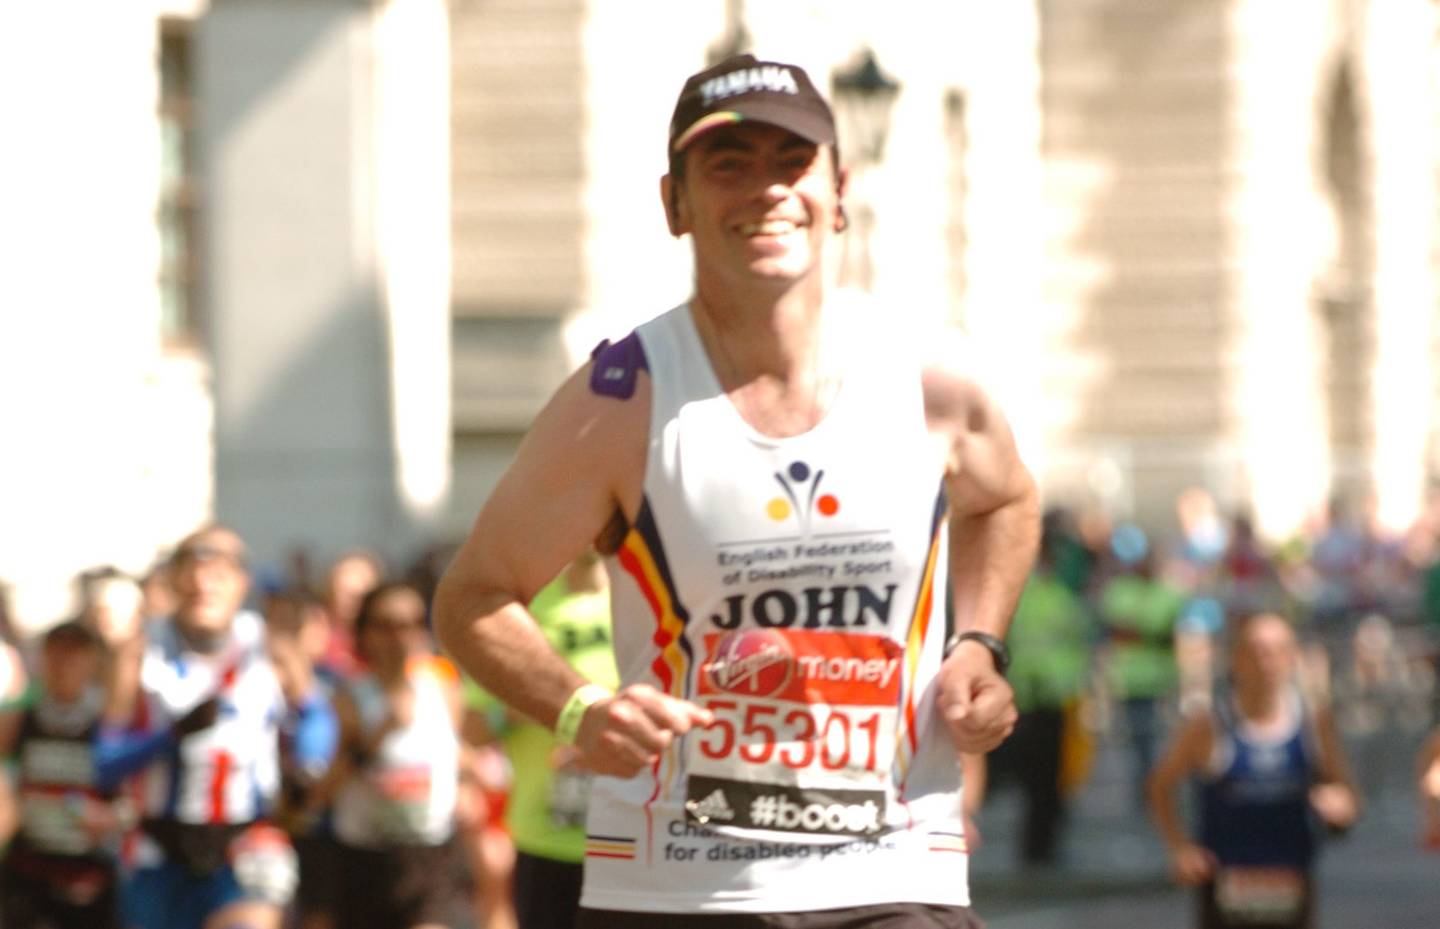 John running in the London Marathon